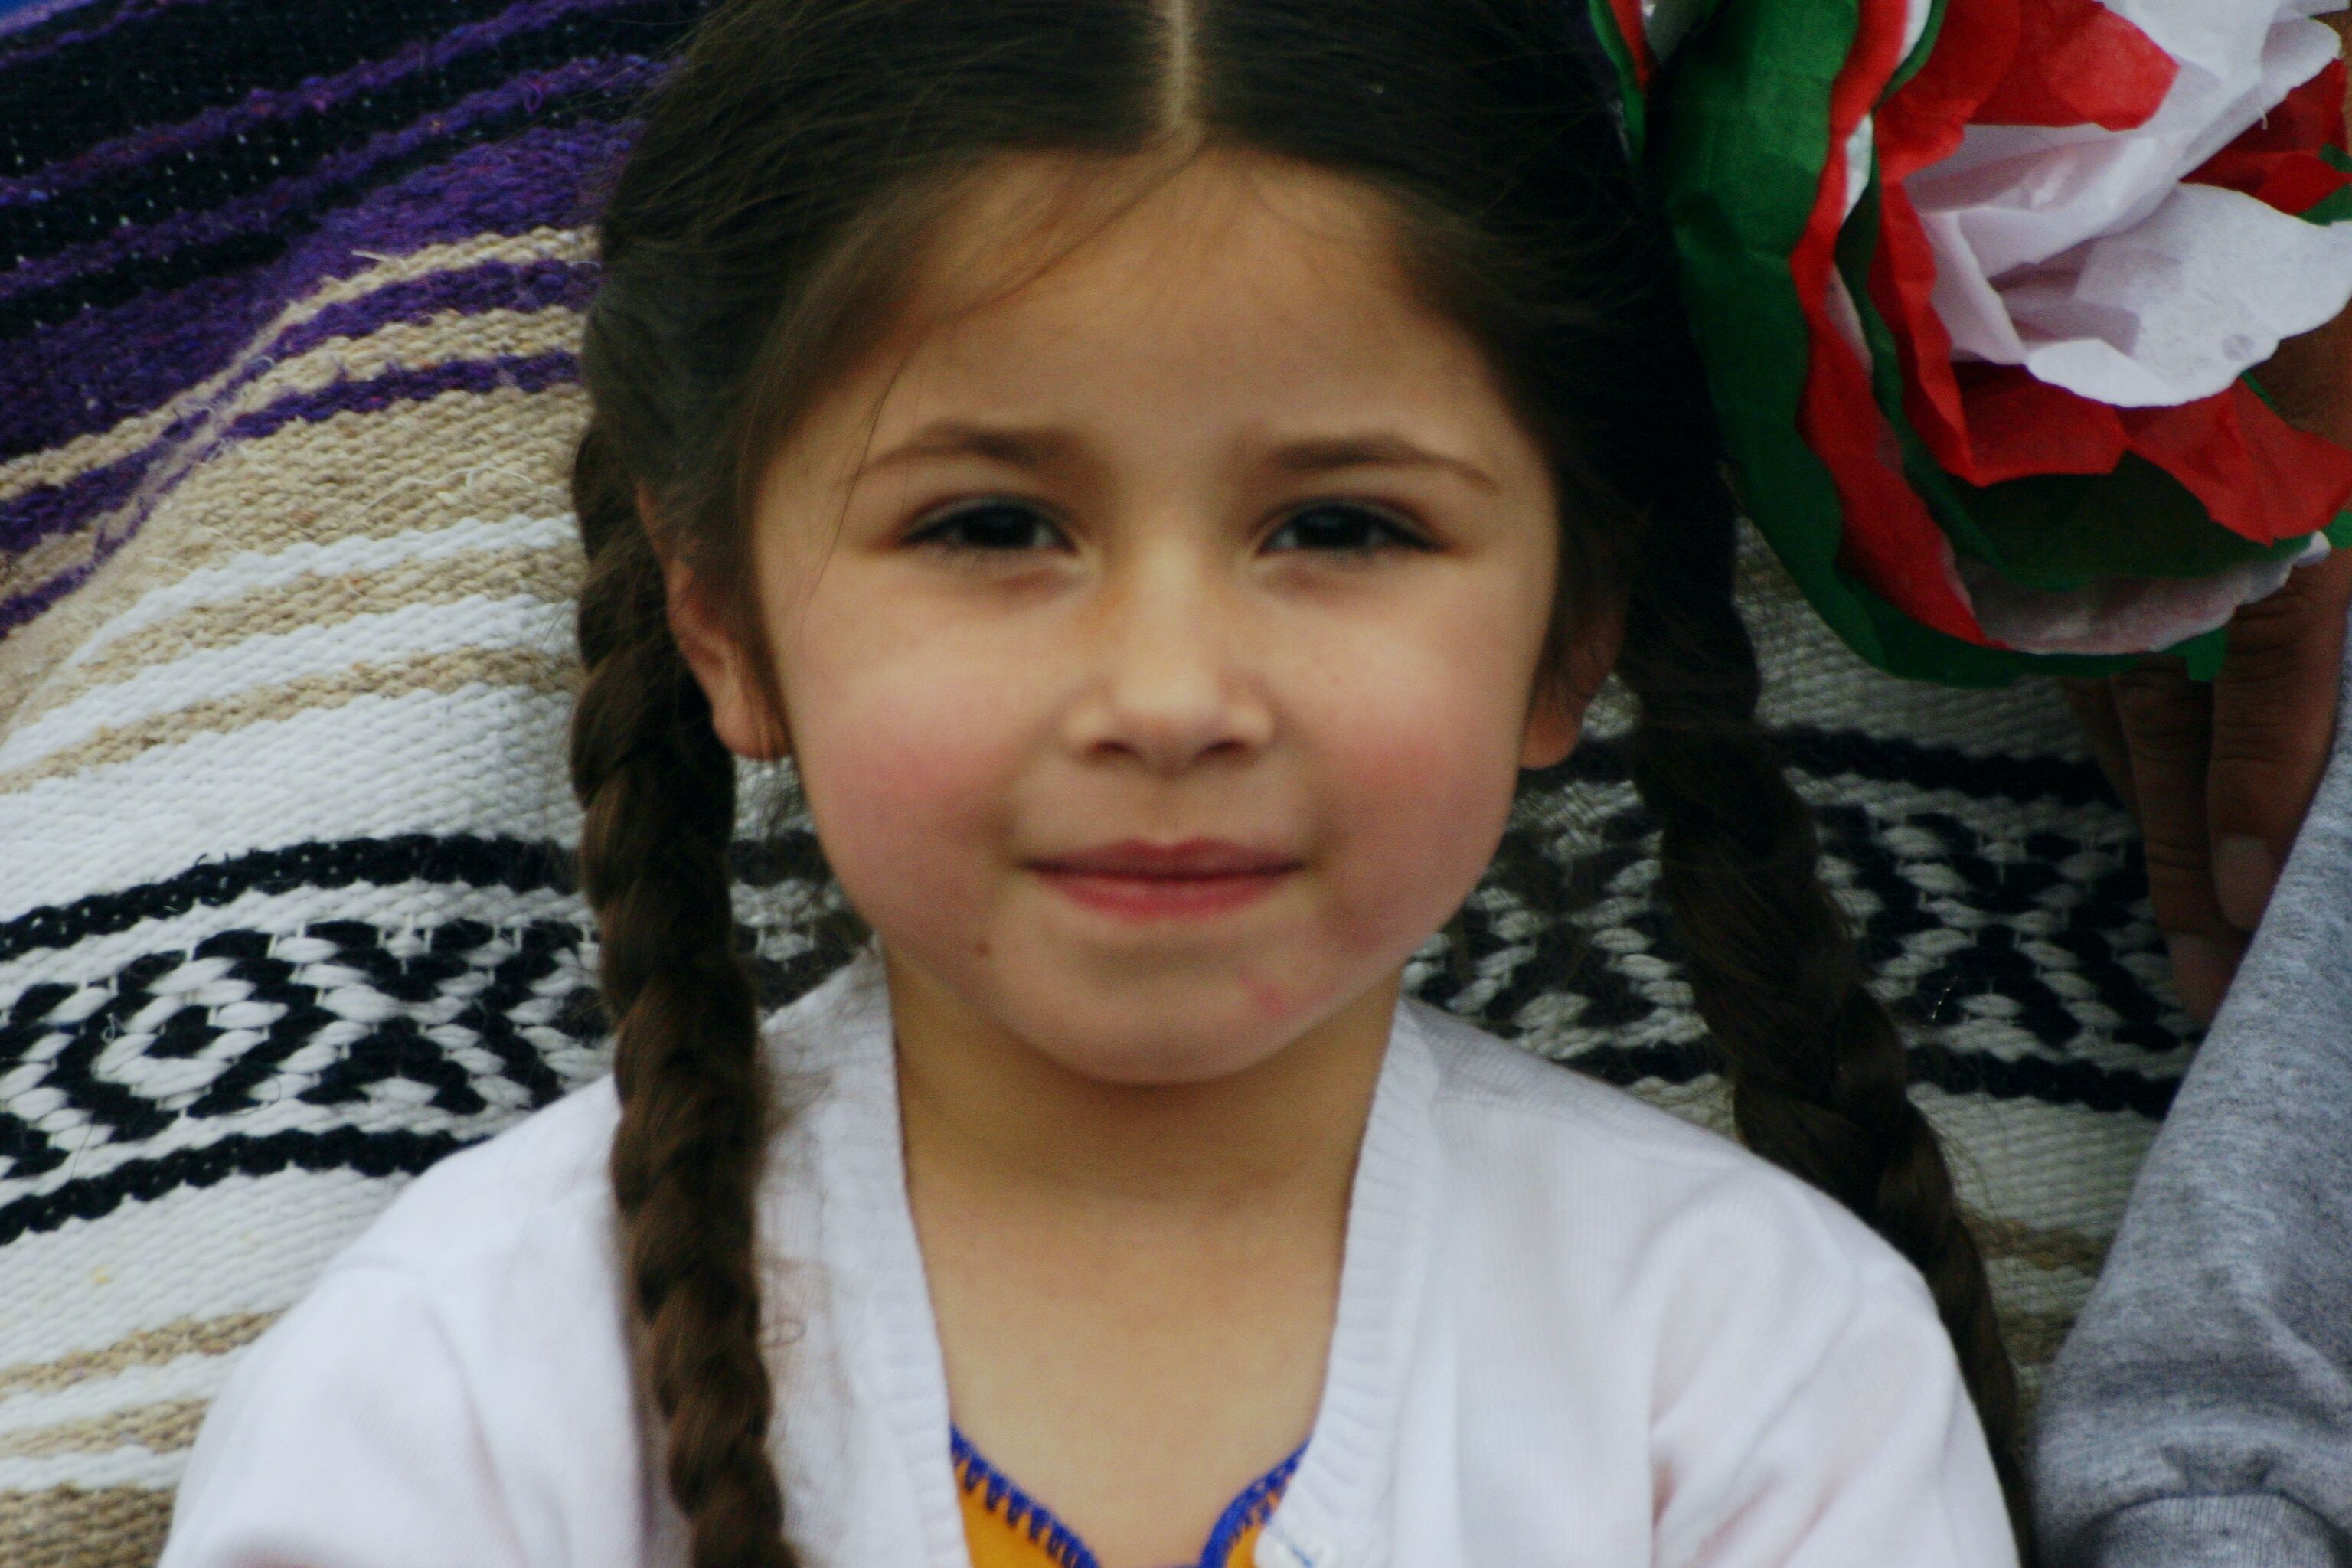 antoine cartier share cute little mexican girl photos